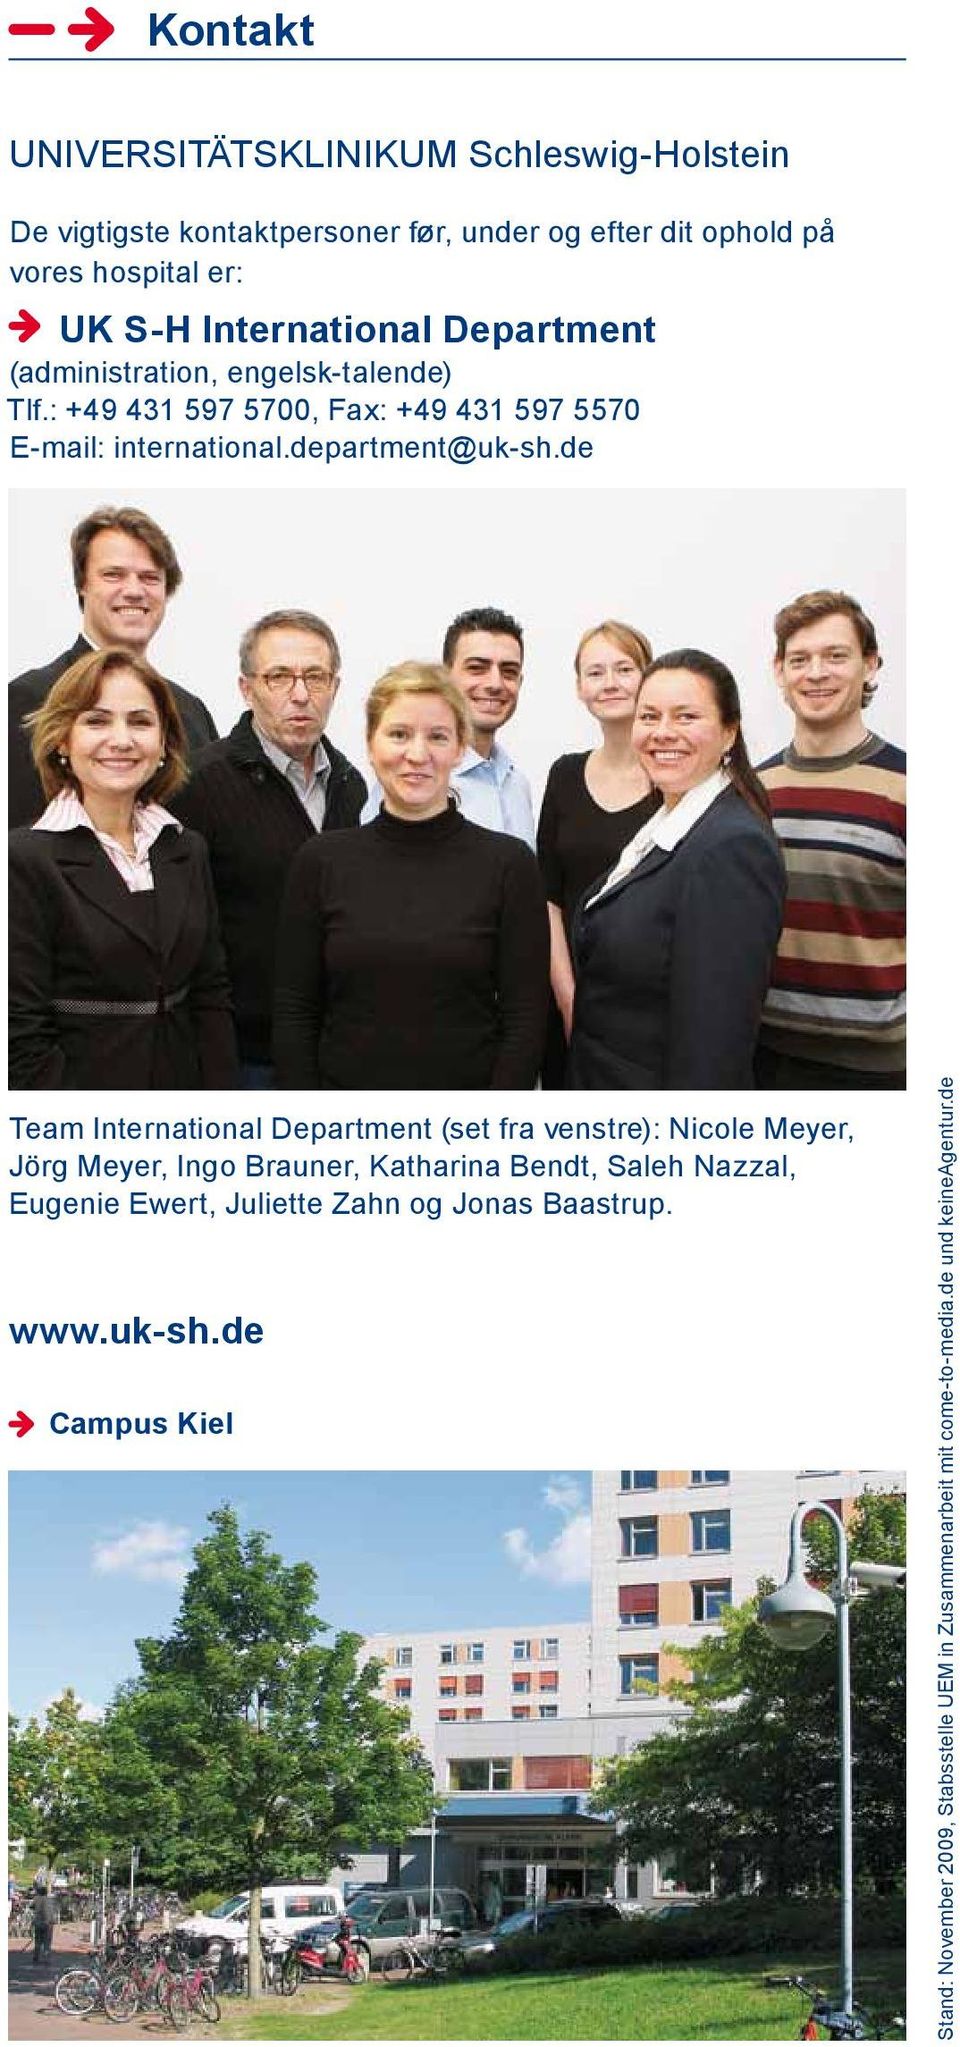 de Team International Department (set fra venstre): Nicole Meyer, Jörg Meyer, Ingo Brauner, Katharina Bendt, Saleh Nazzal, Eugenie Ewert,